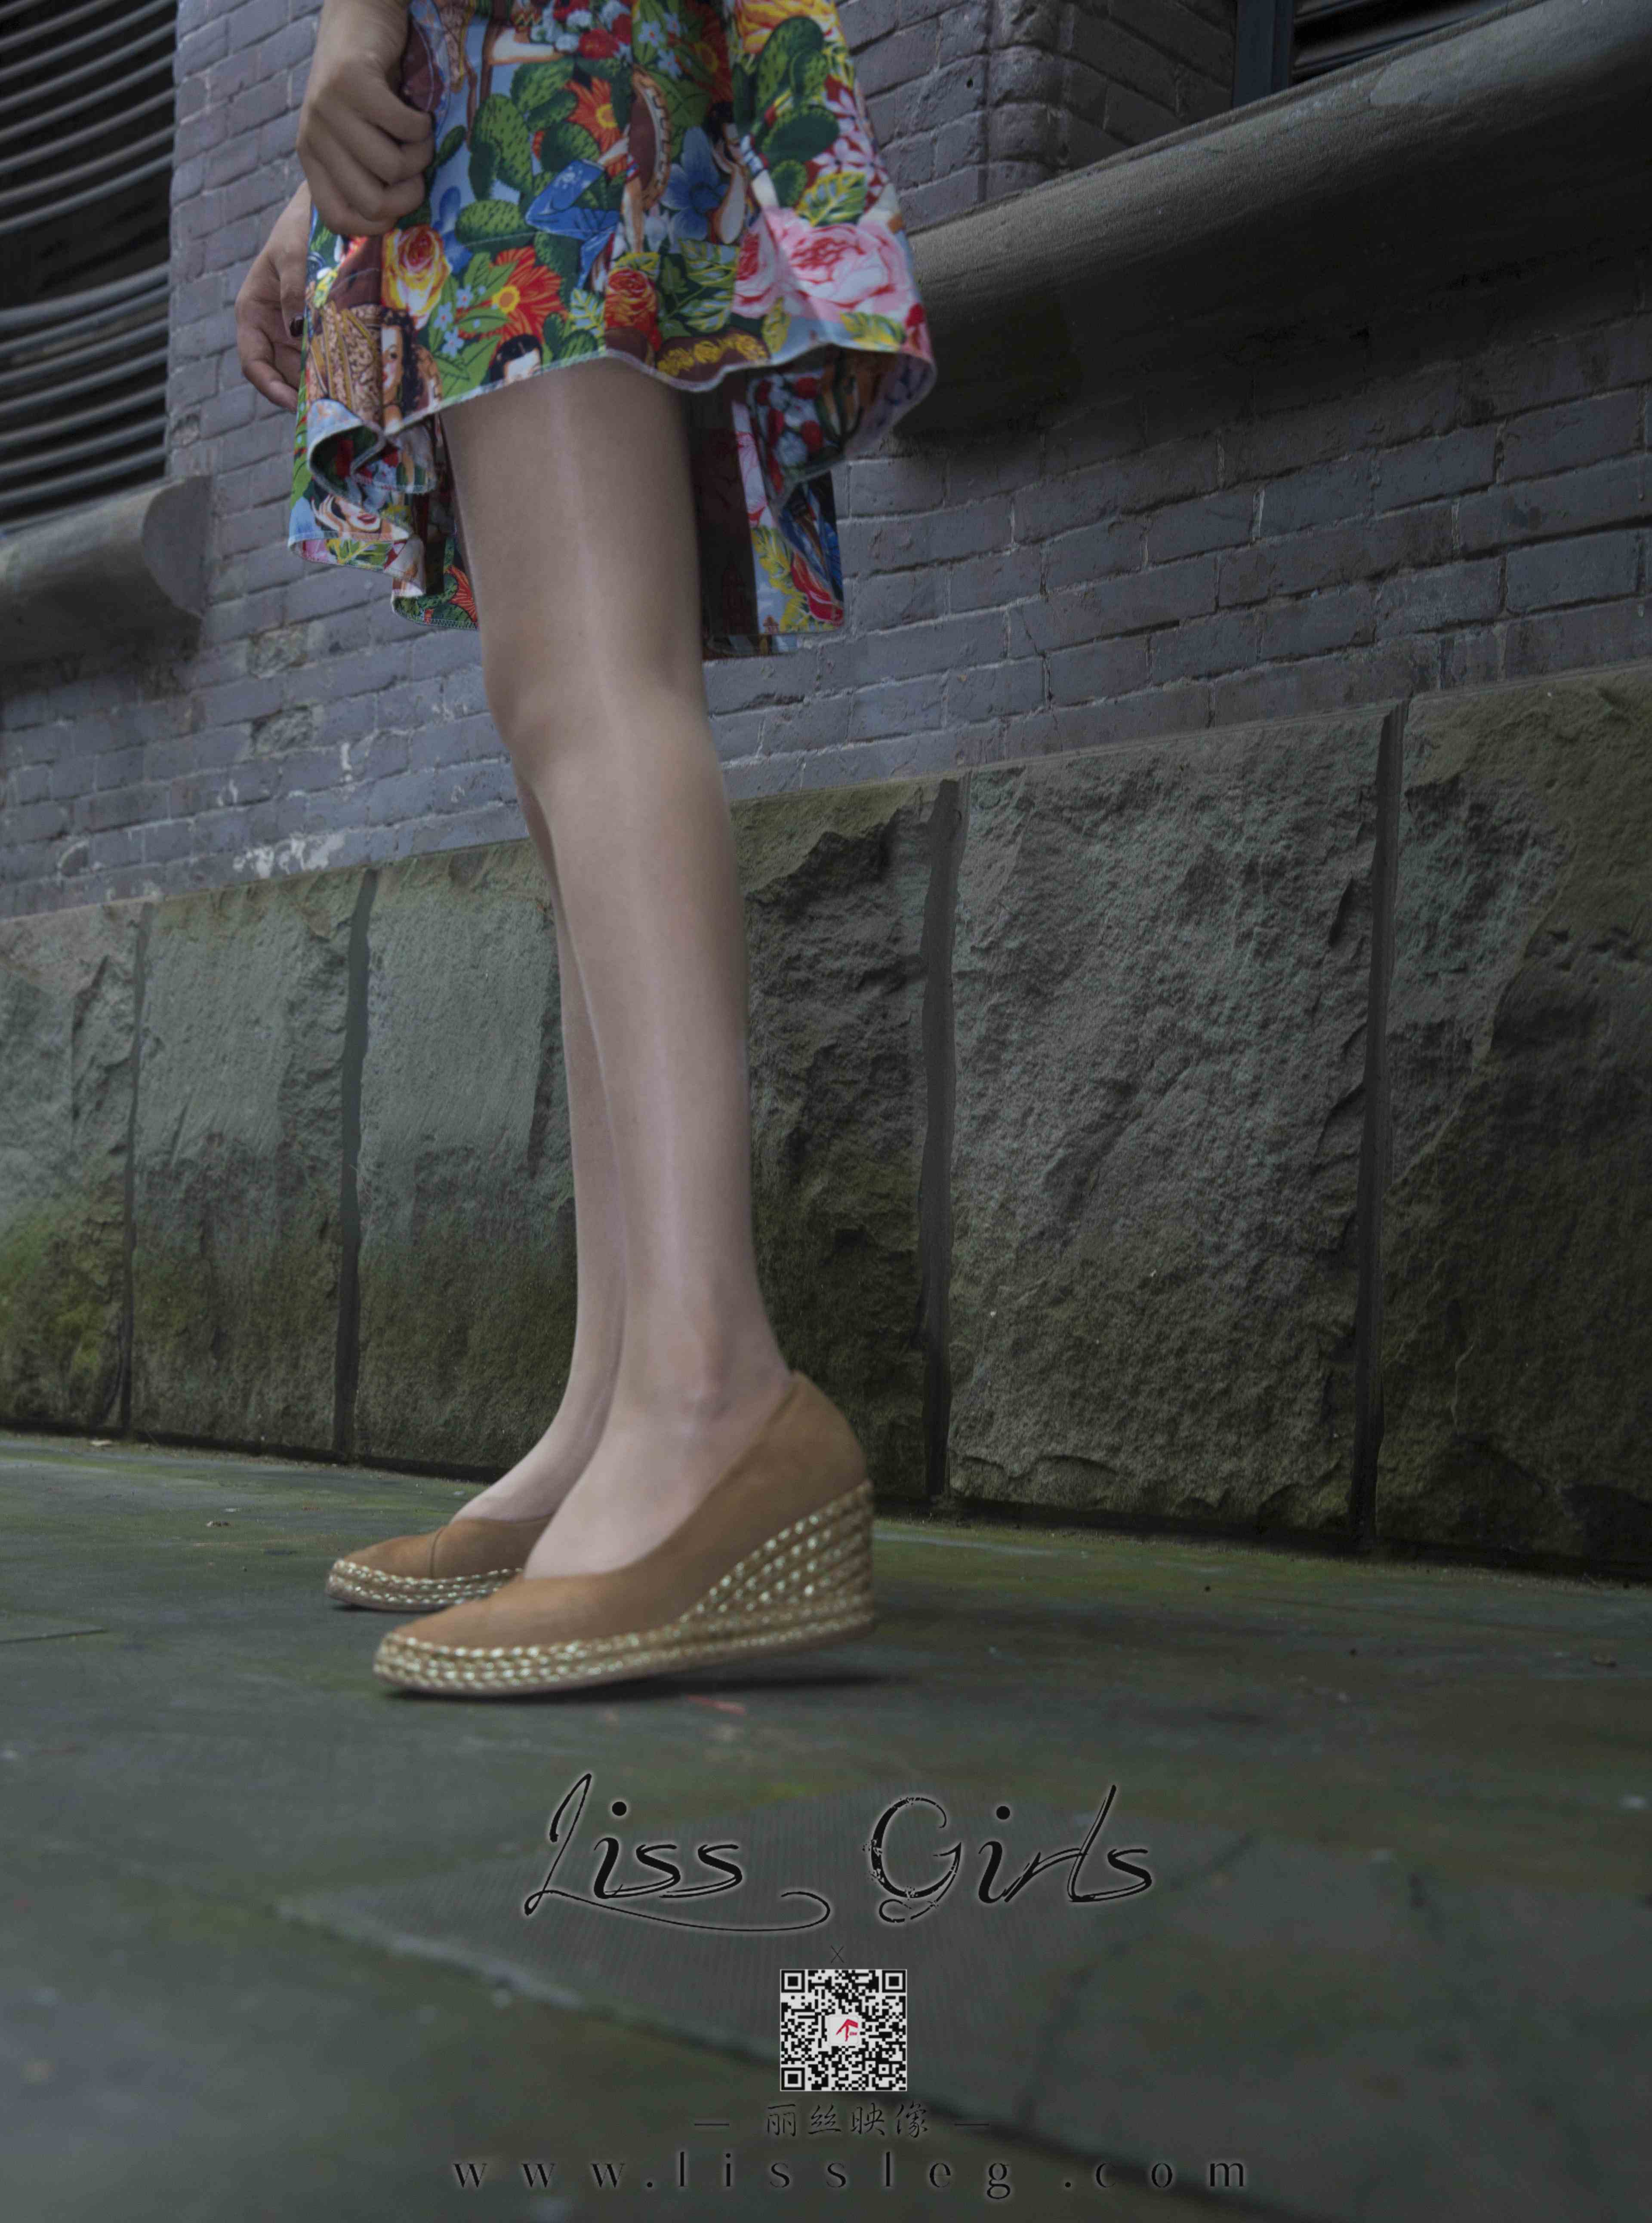 China Beauty Legs and feet 699